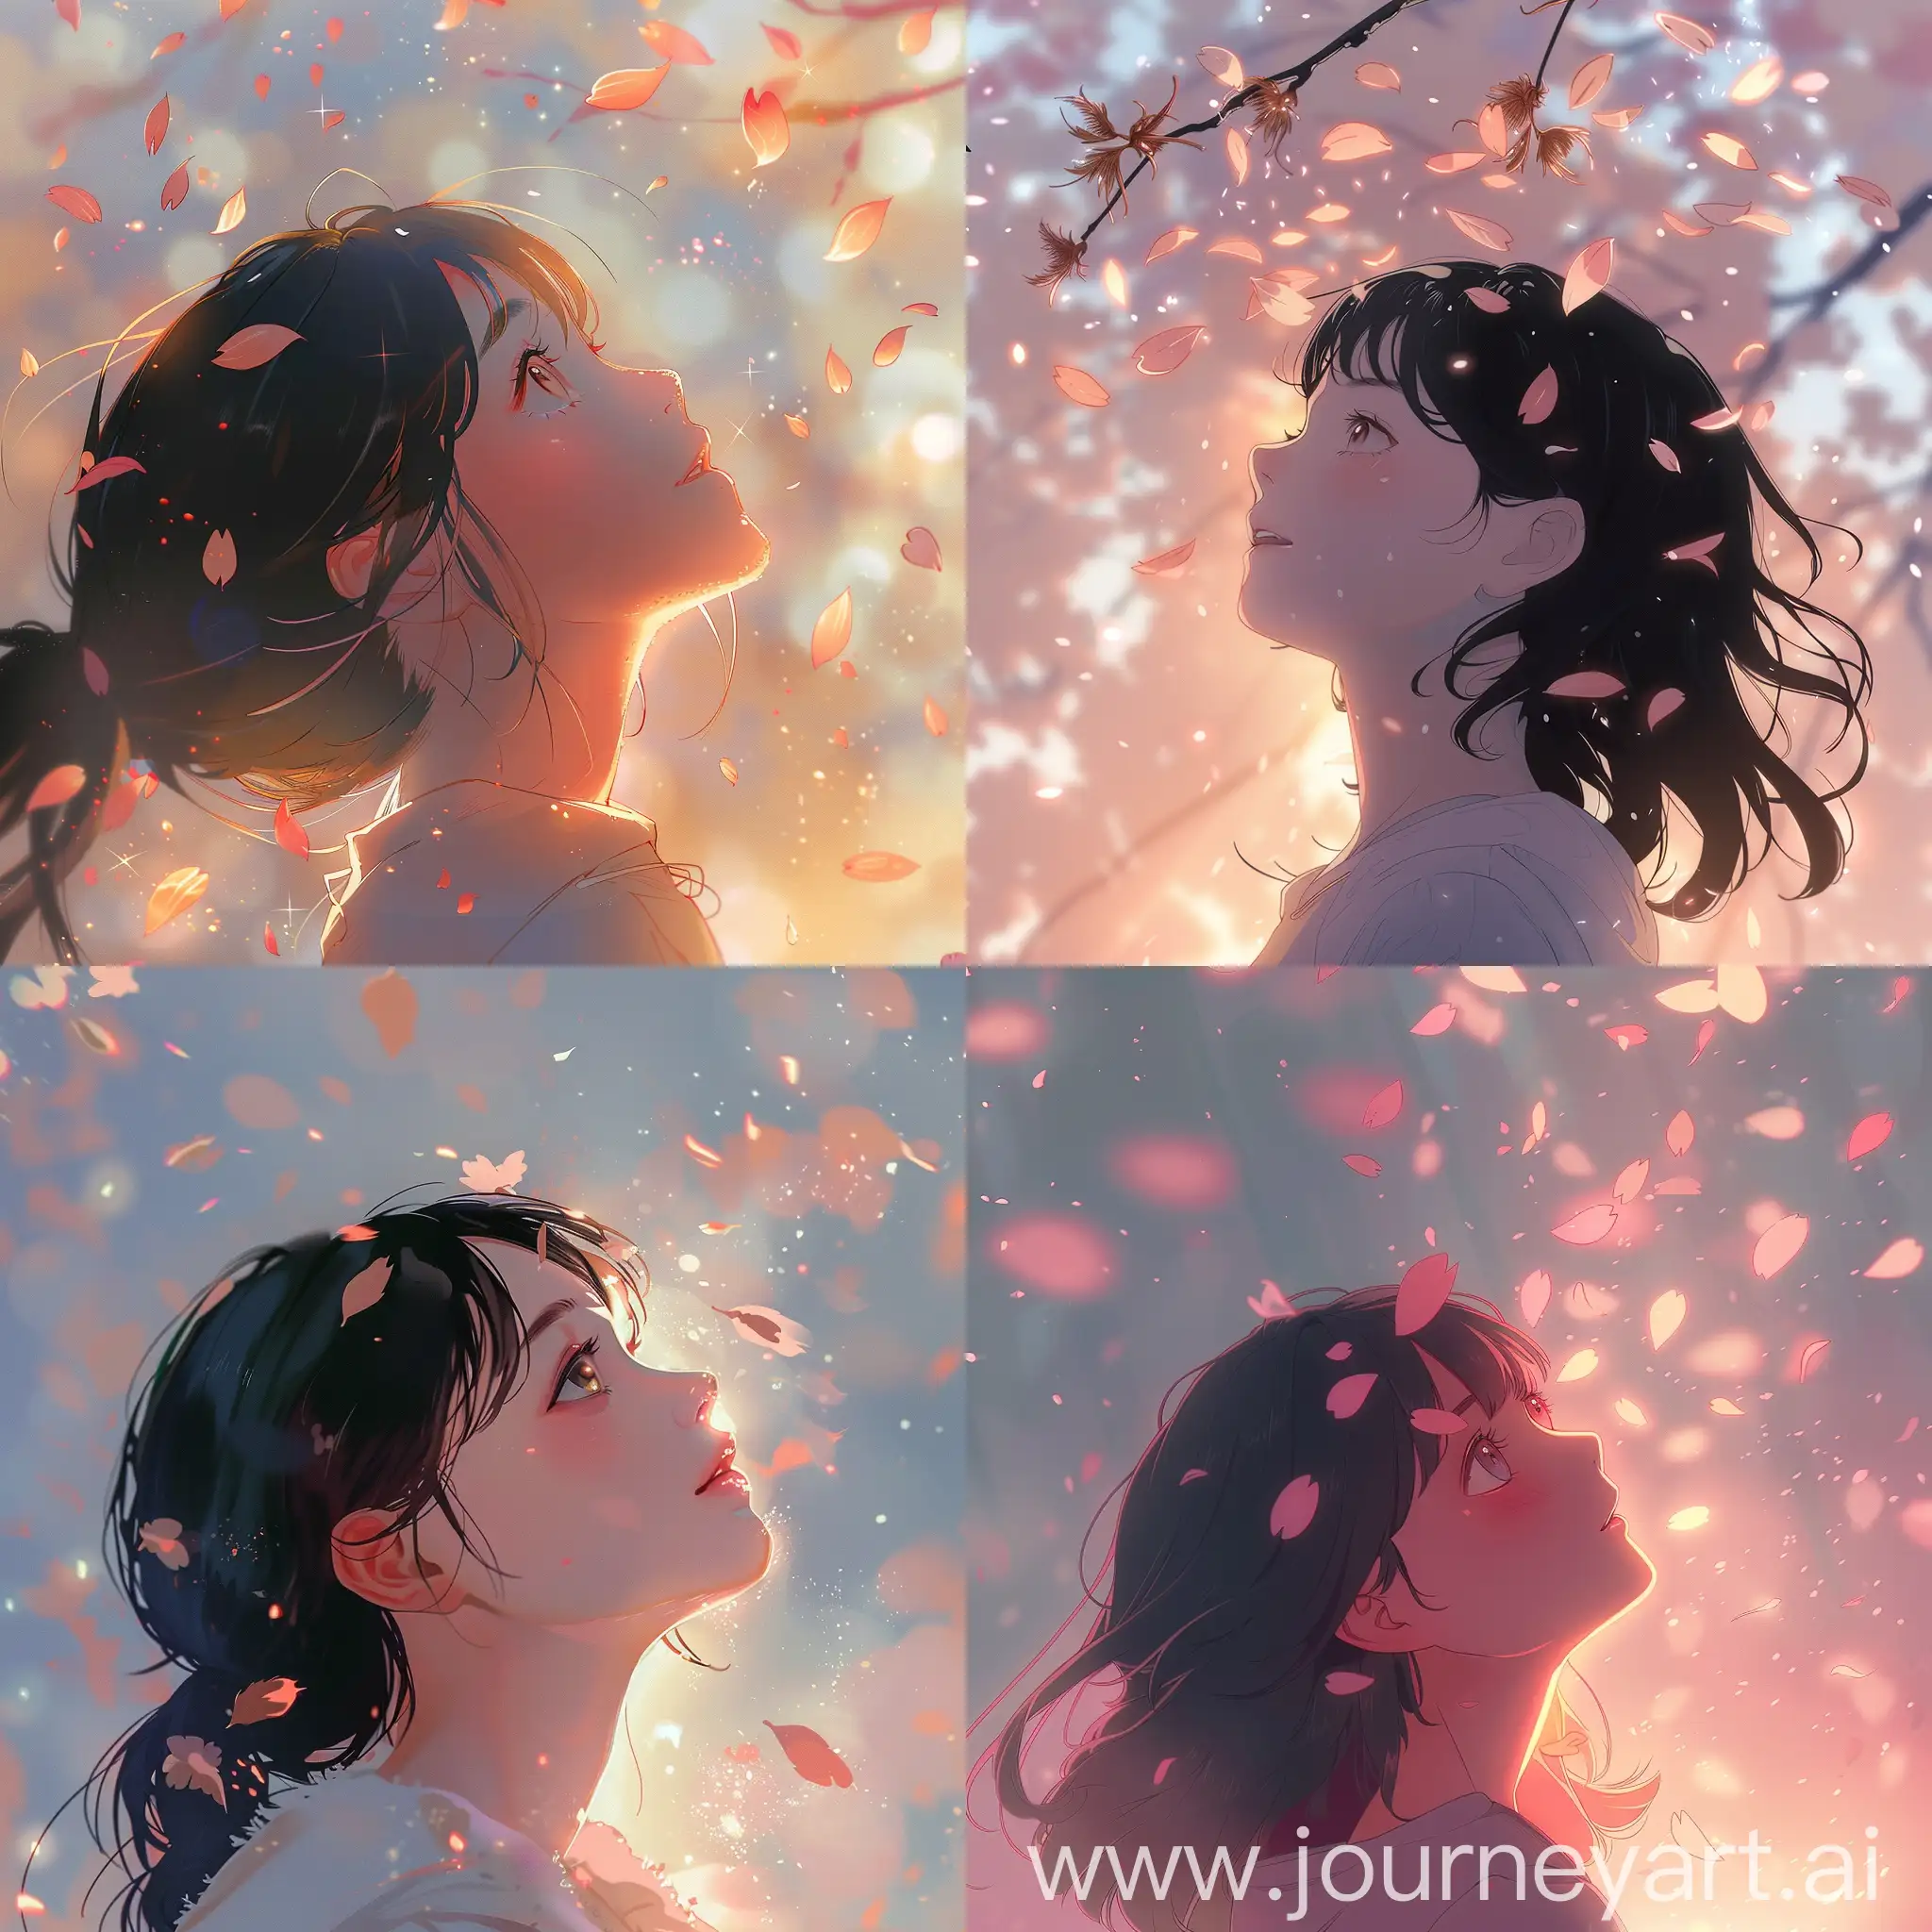 Anime-Girl-Admiring-Cherry-Blossoms-Under-Soft-Glow